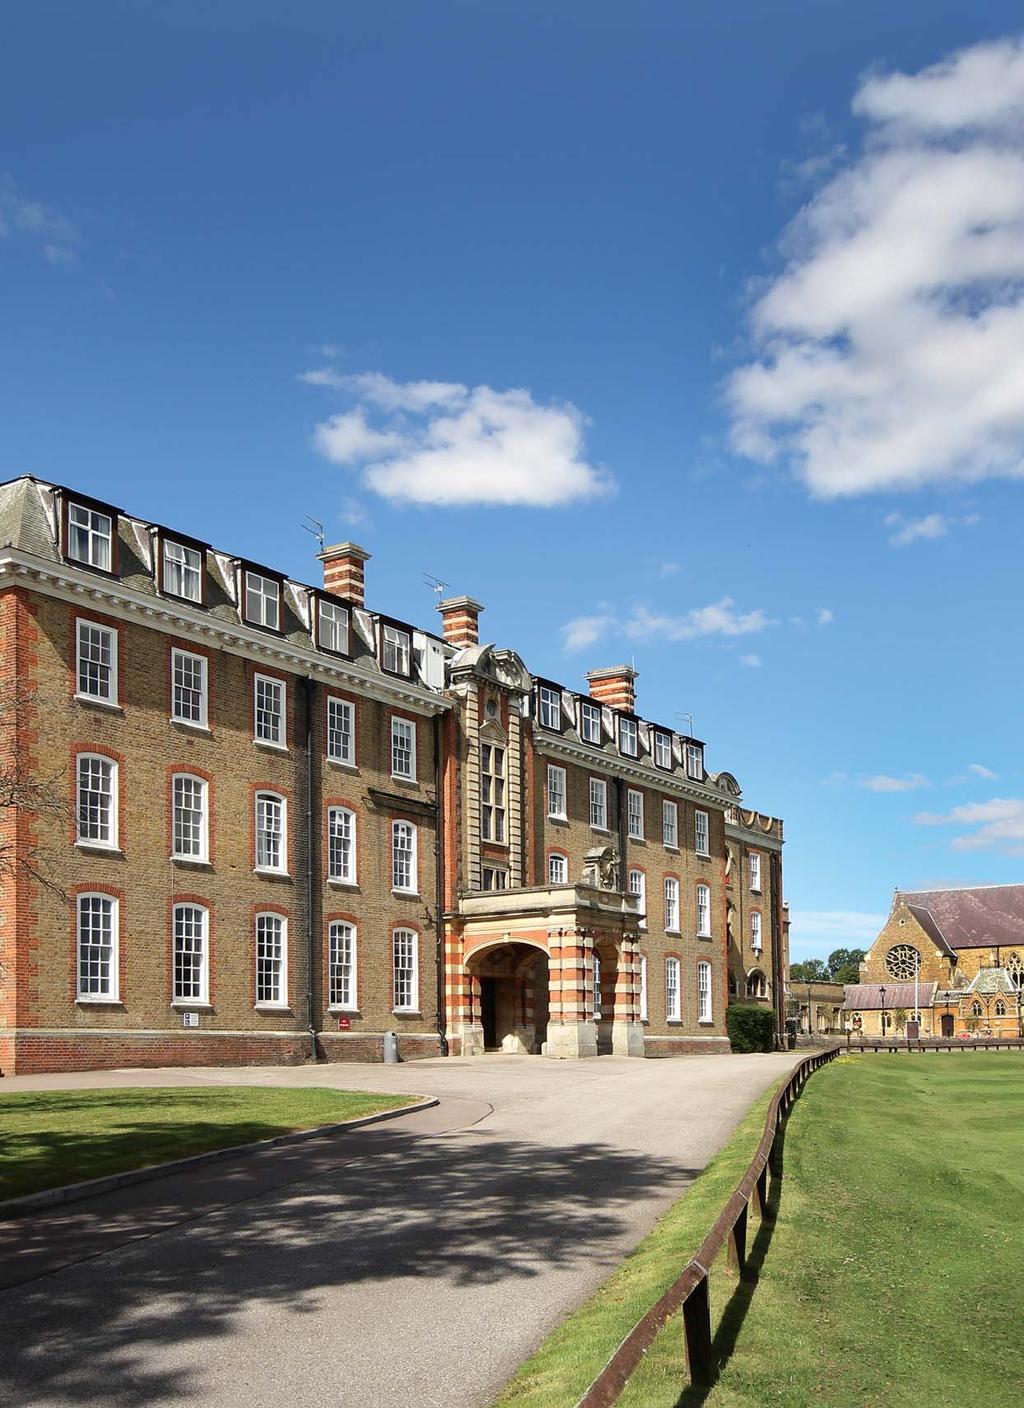 St Edmund's College is England's oldest